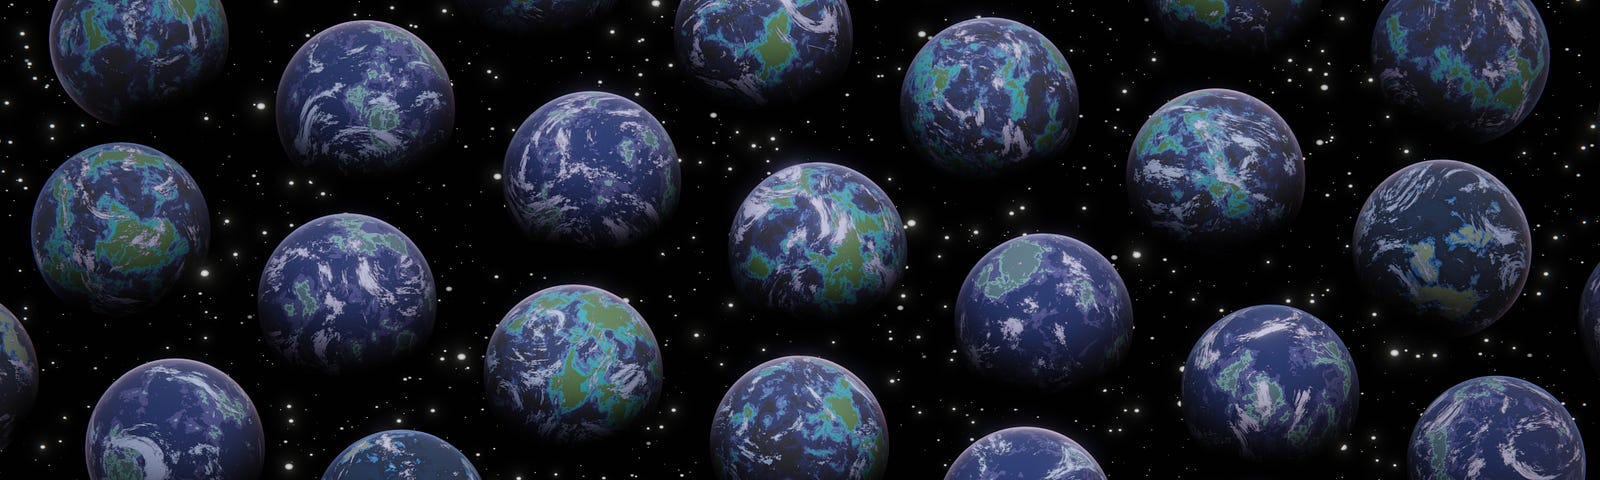 Multiverse Parallel universe clones Max Tegmark atom